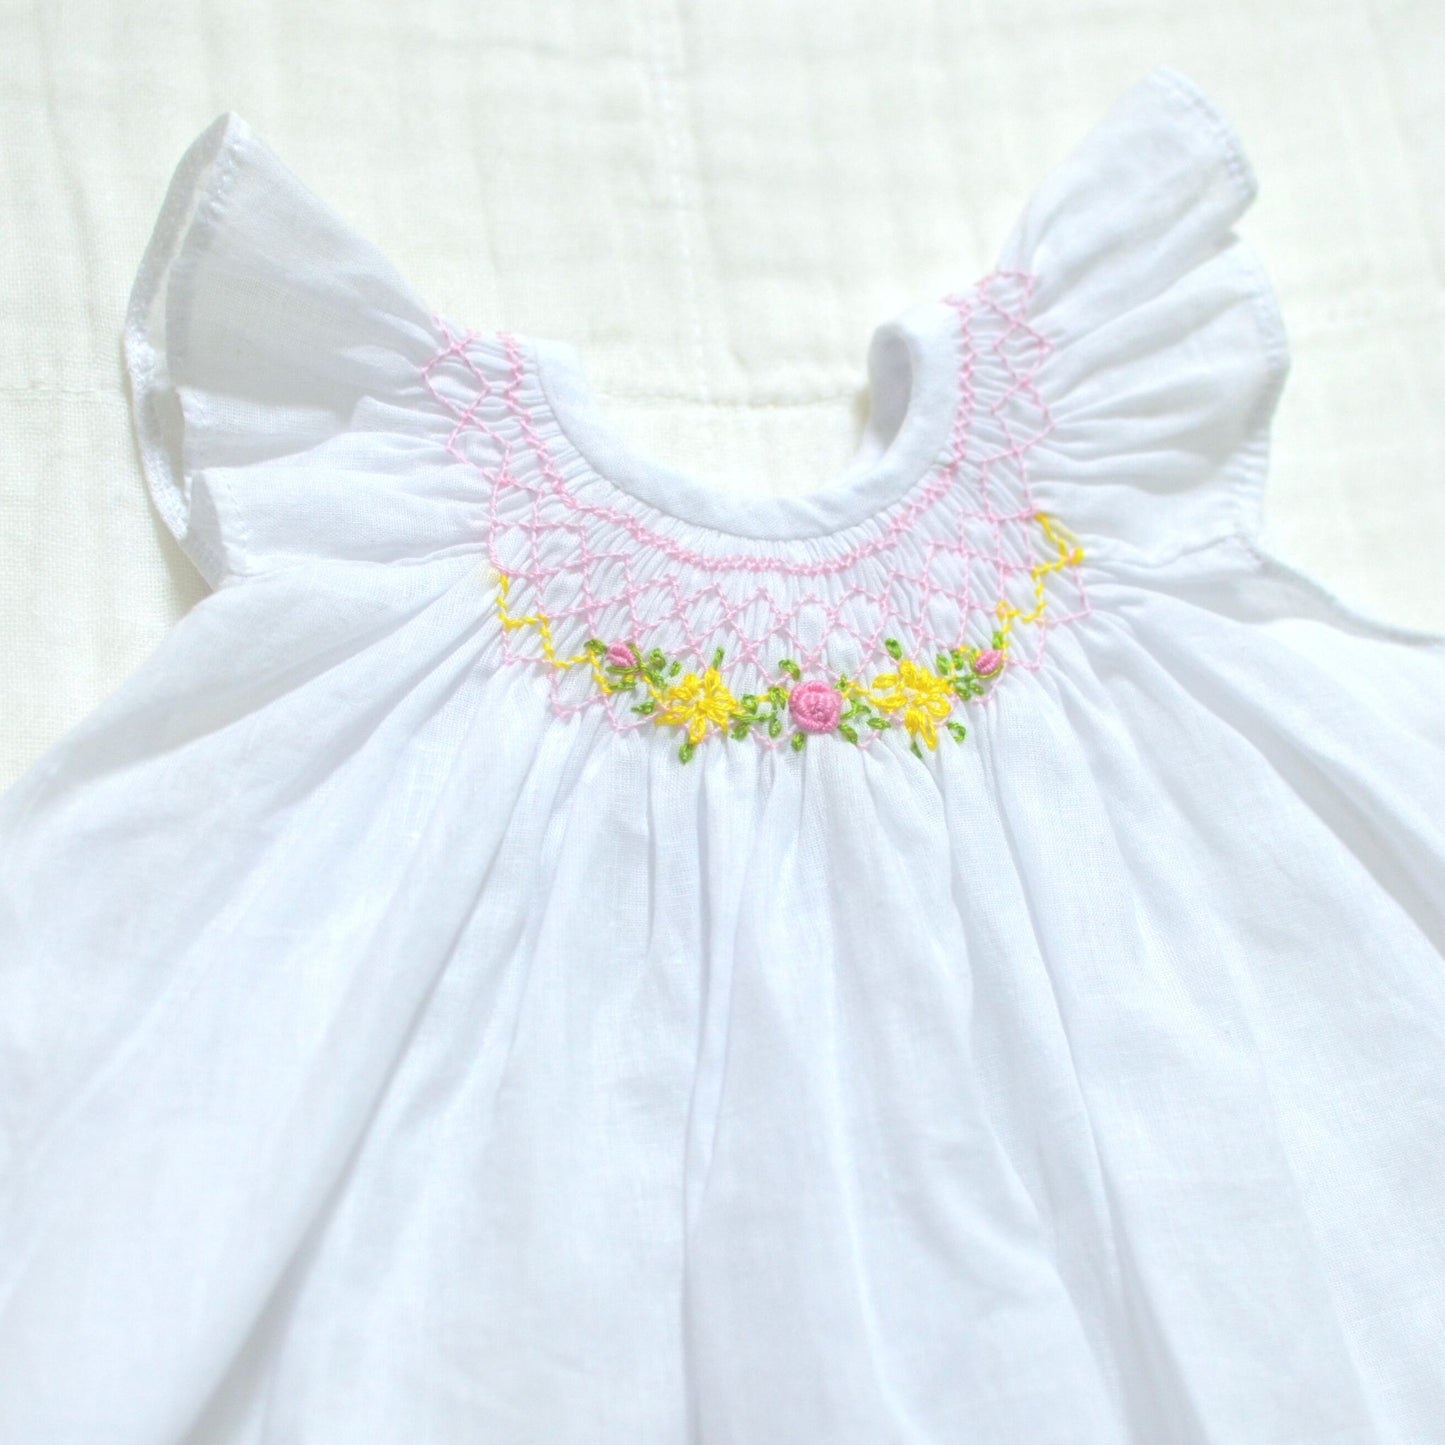 Handmade Bishop Smock Newborn Dress